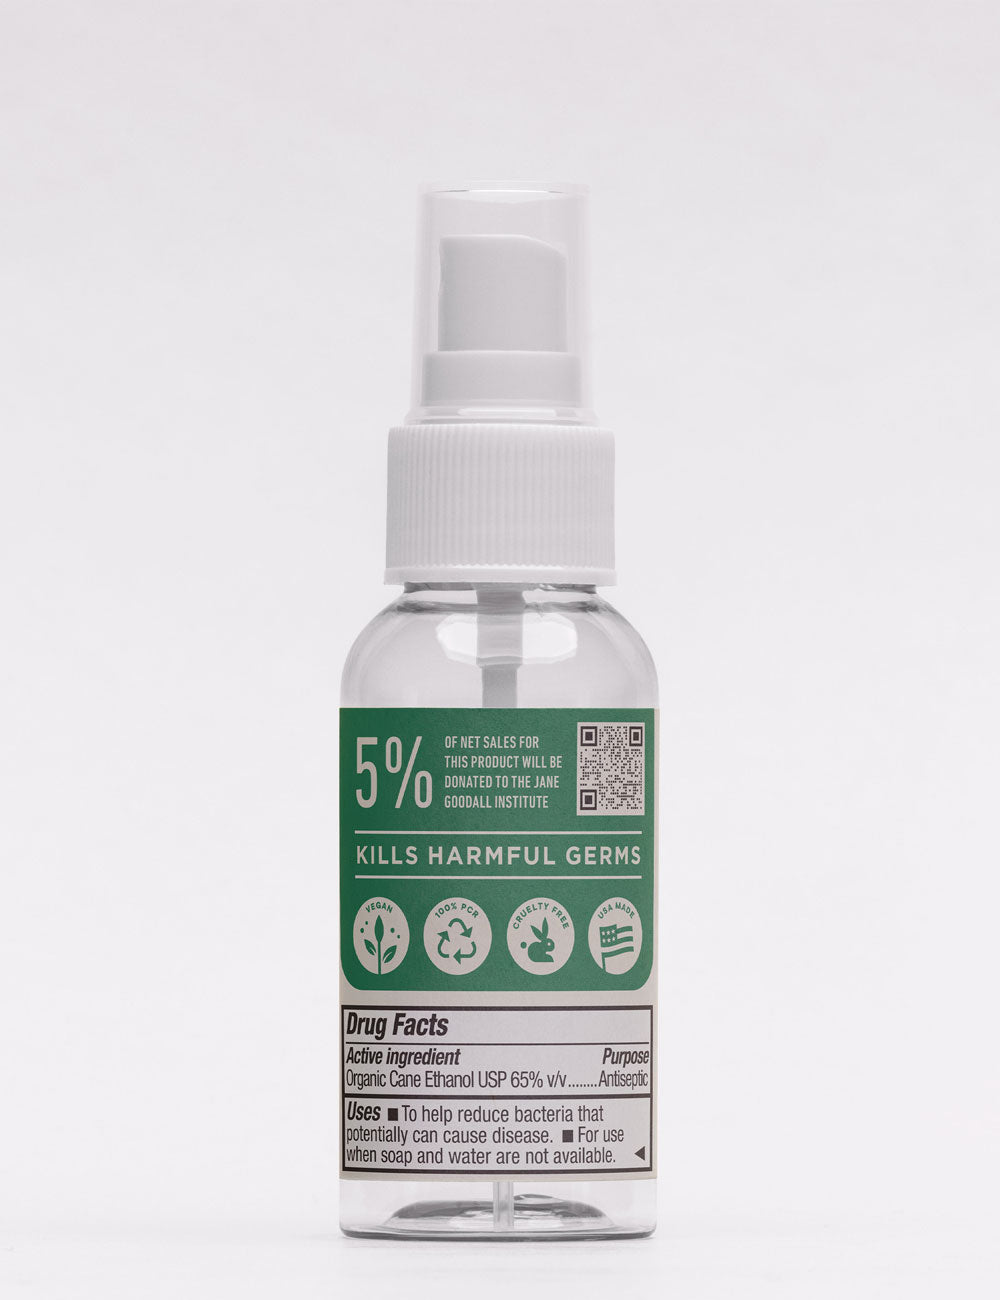 Plant-based Rosemary Hand Sanitizer 6-Pack